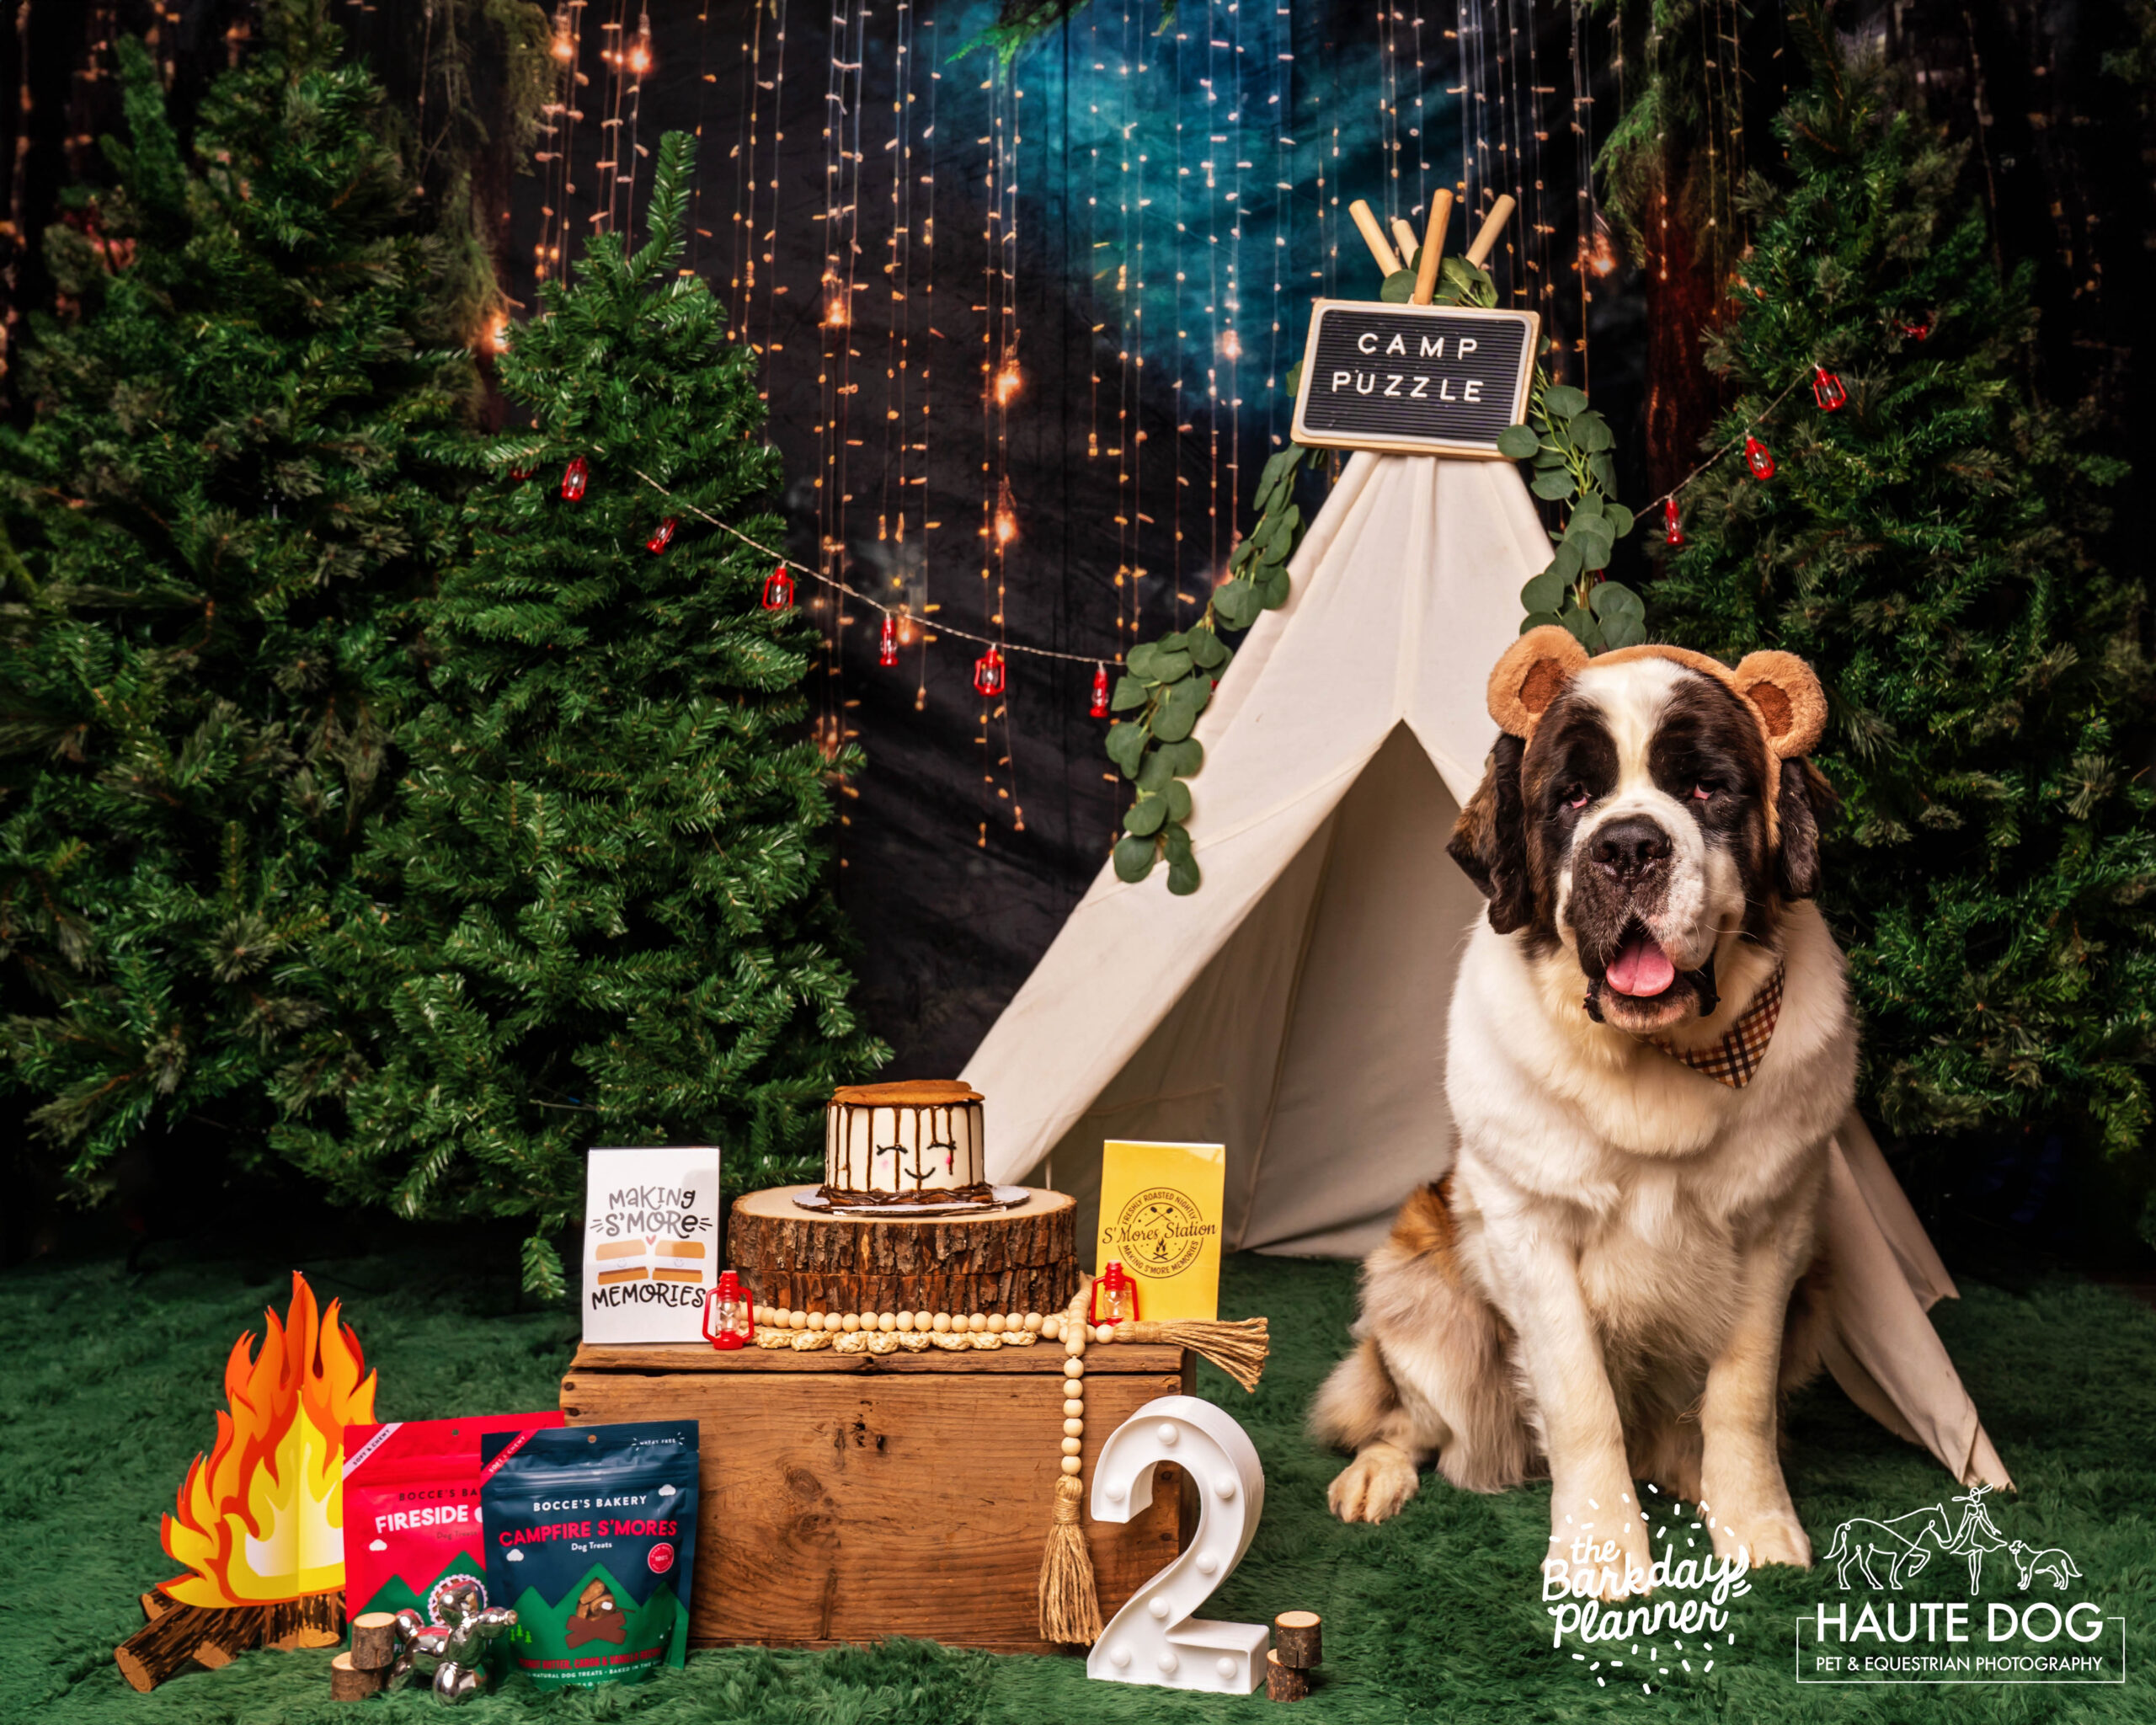 Camping birthday photoshoot for Saint Bernard dog